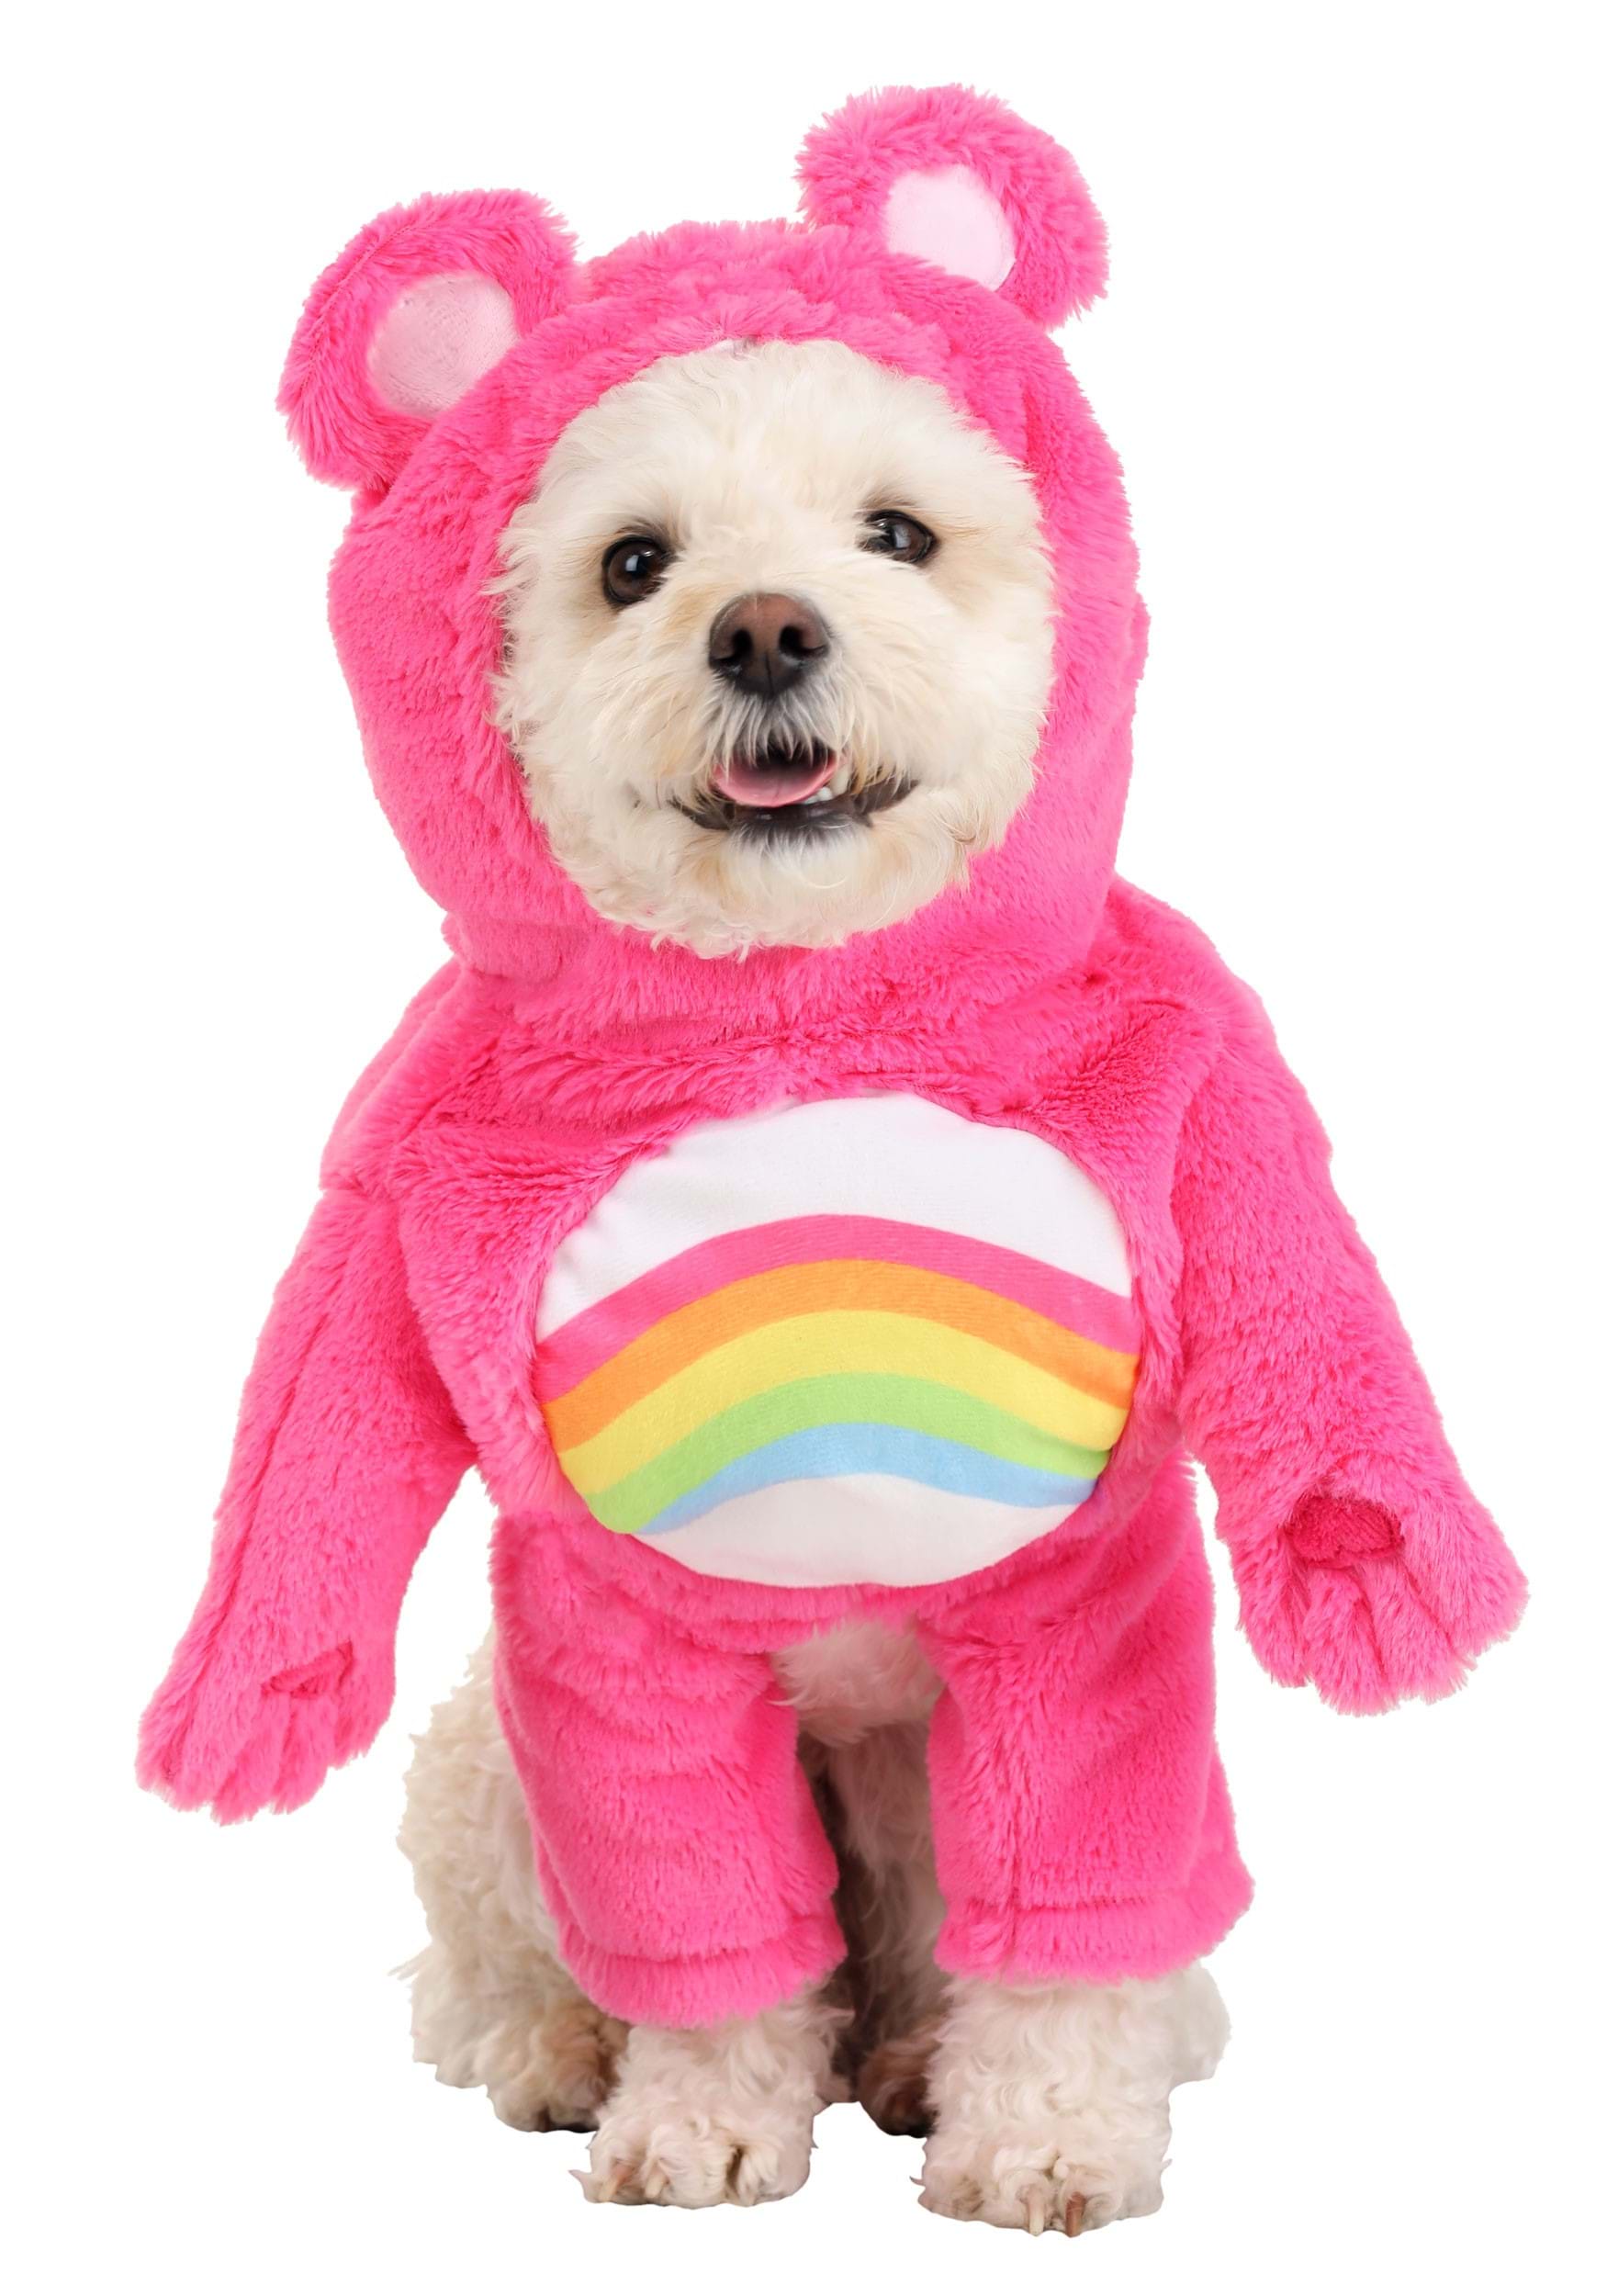 Photos - Fancy Dress BEAR FUN Costumes Care Bears Cheer  Dog Costume Pink/White FUN1827 